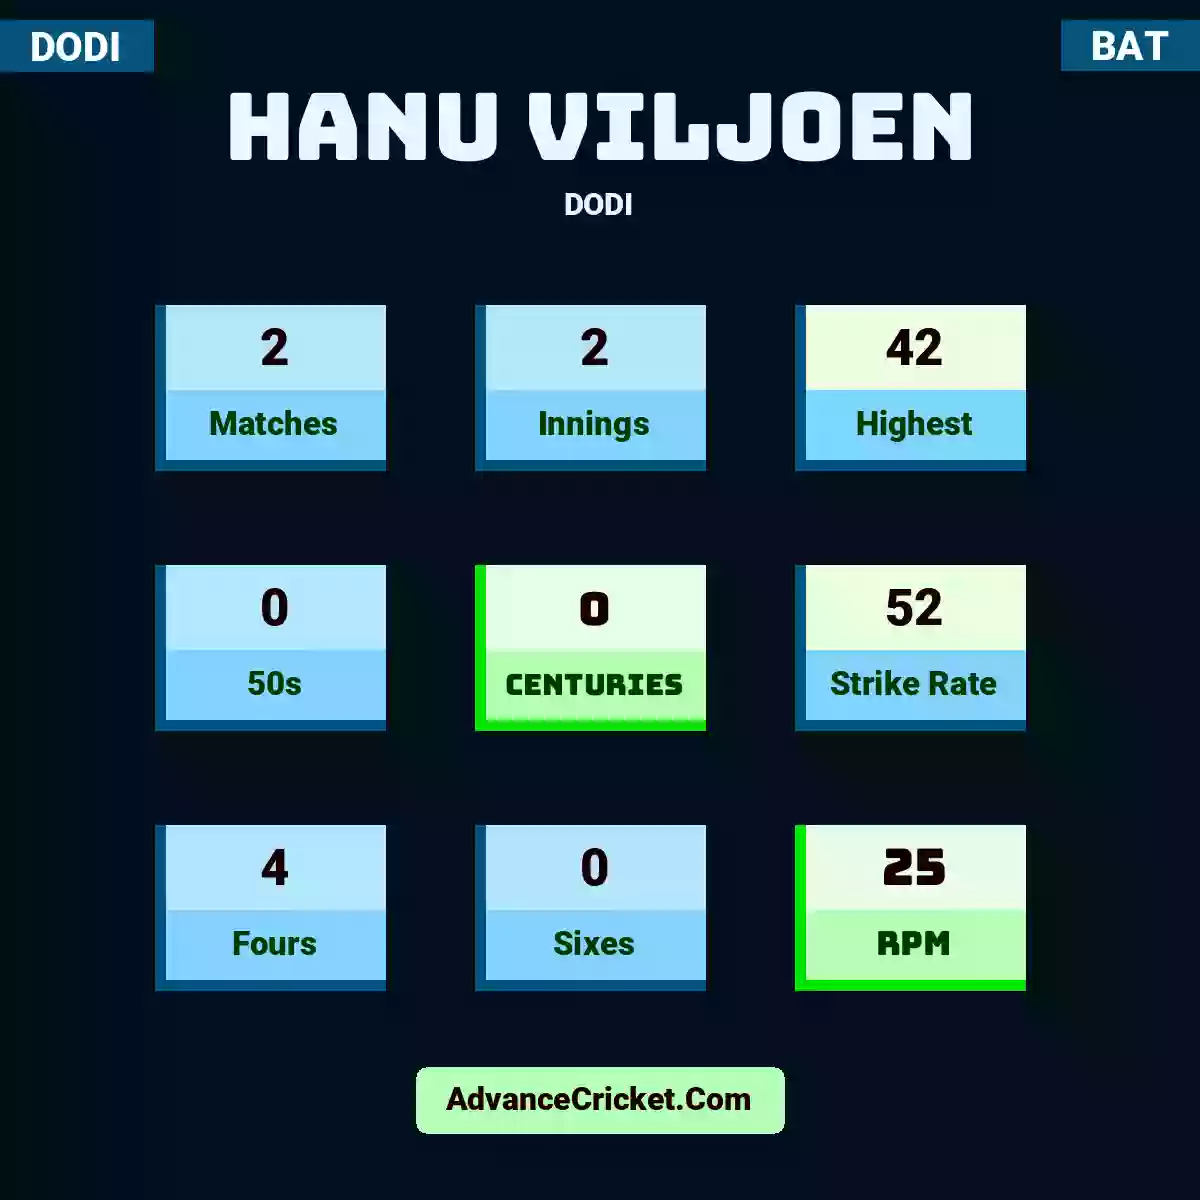 Hanu Viljoen DODI , Hanu Viljoen played 2 matches, scored 42 runs as highest, 0 half-centuries, and 0 centuries, with a strike rate of 52. H.Viljoen hit 4 fours and 0 sixes, with an RPM of 25.